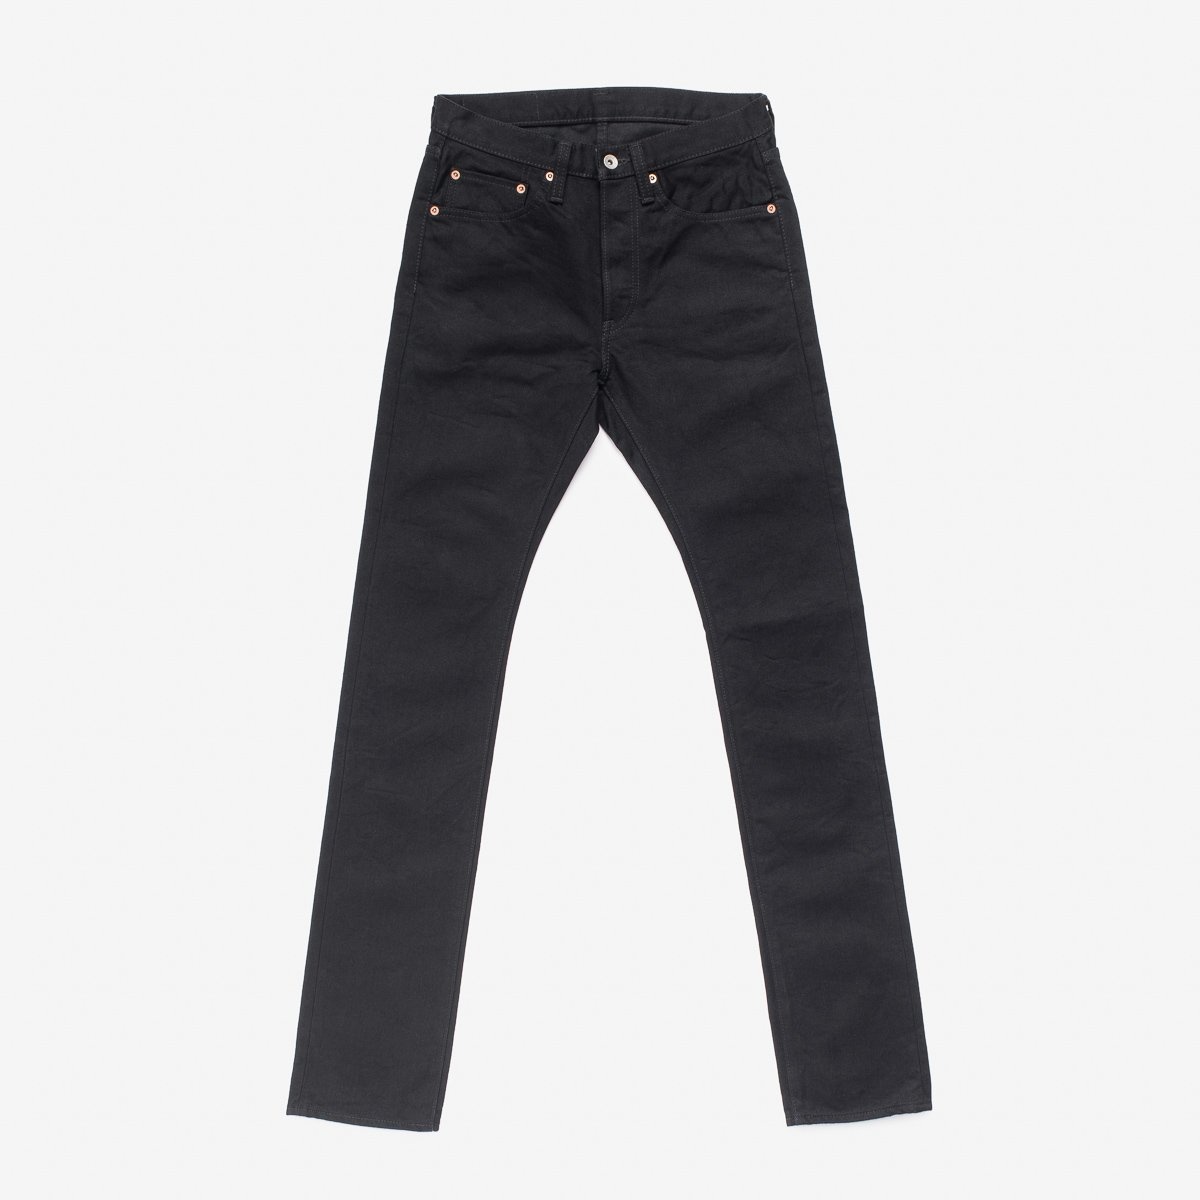 IH-555S-142bb 14oz Selvedge Denim Super Slim Cut Jeans - Black/Black - 1